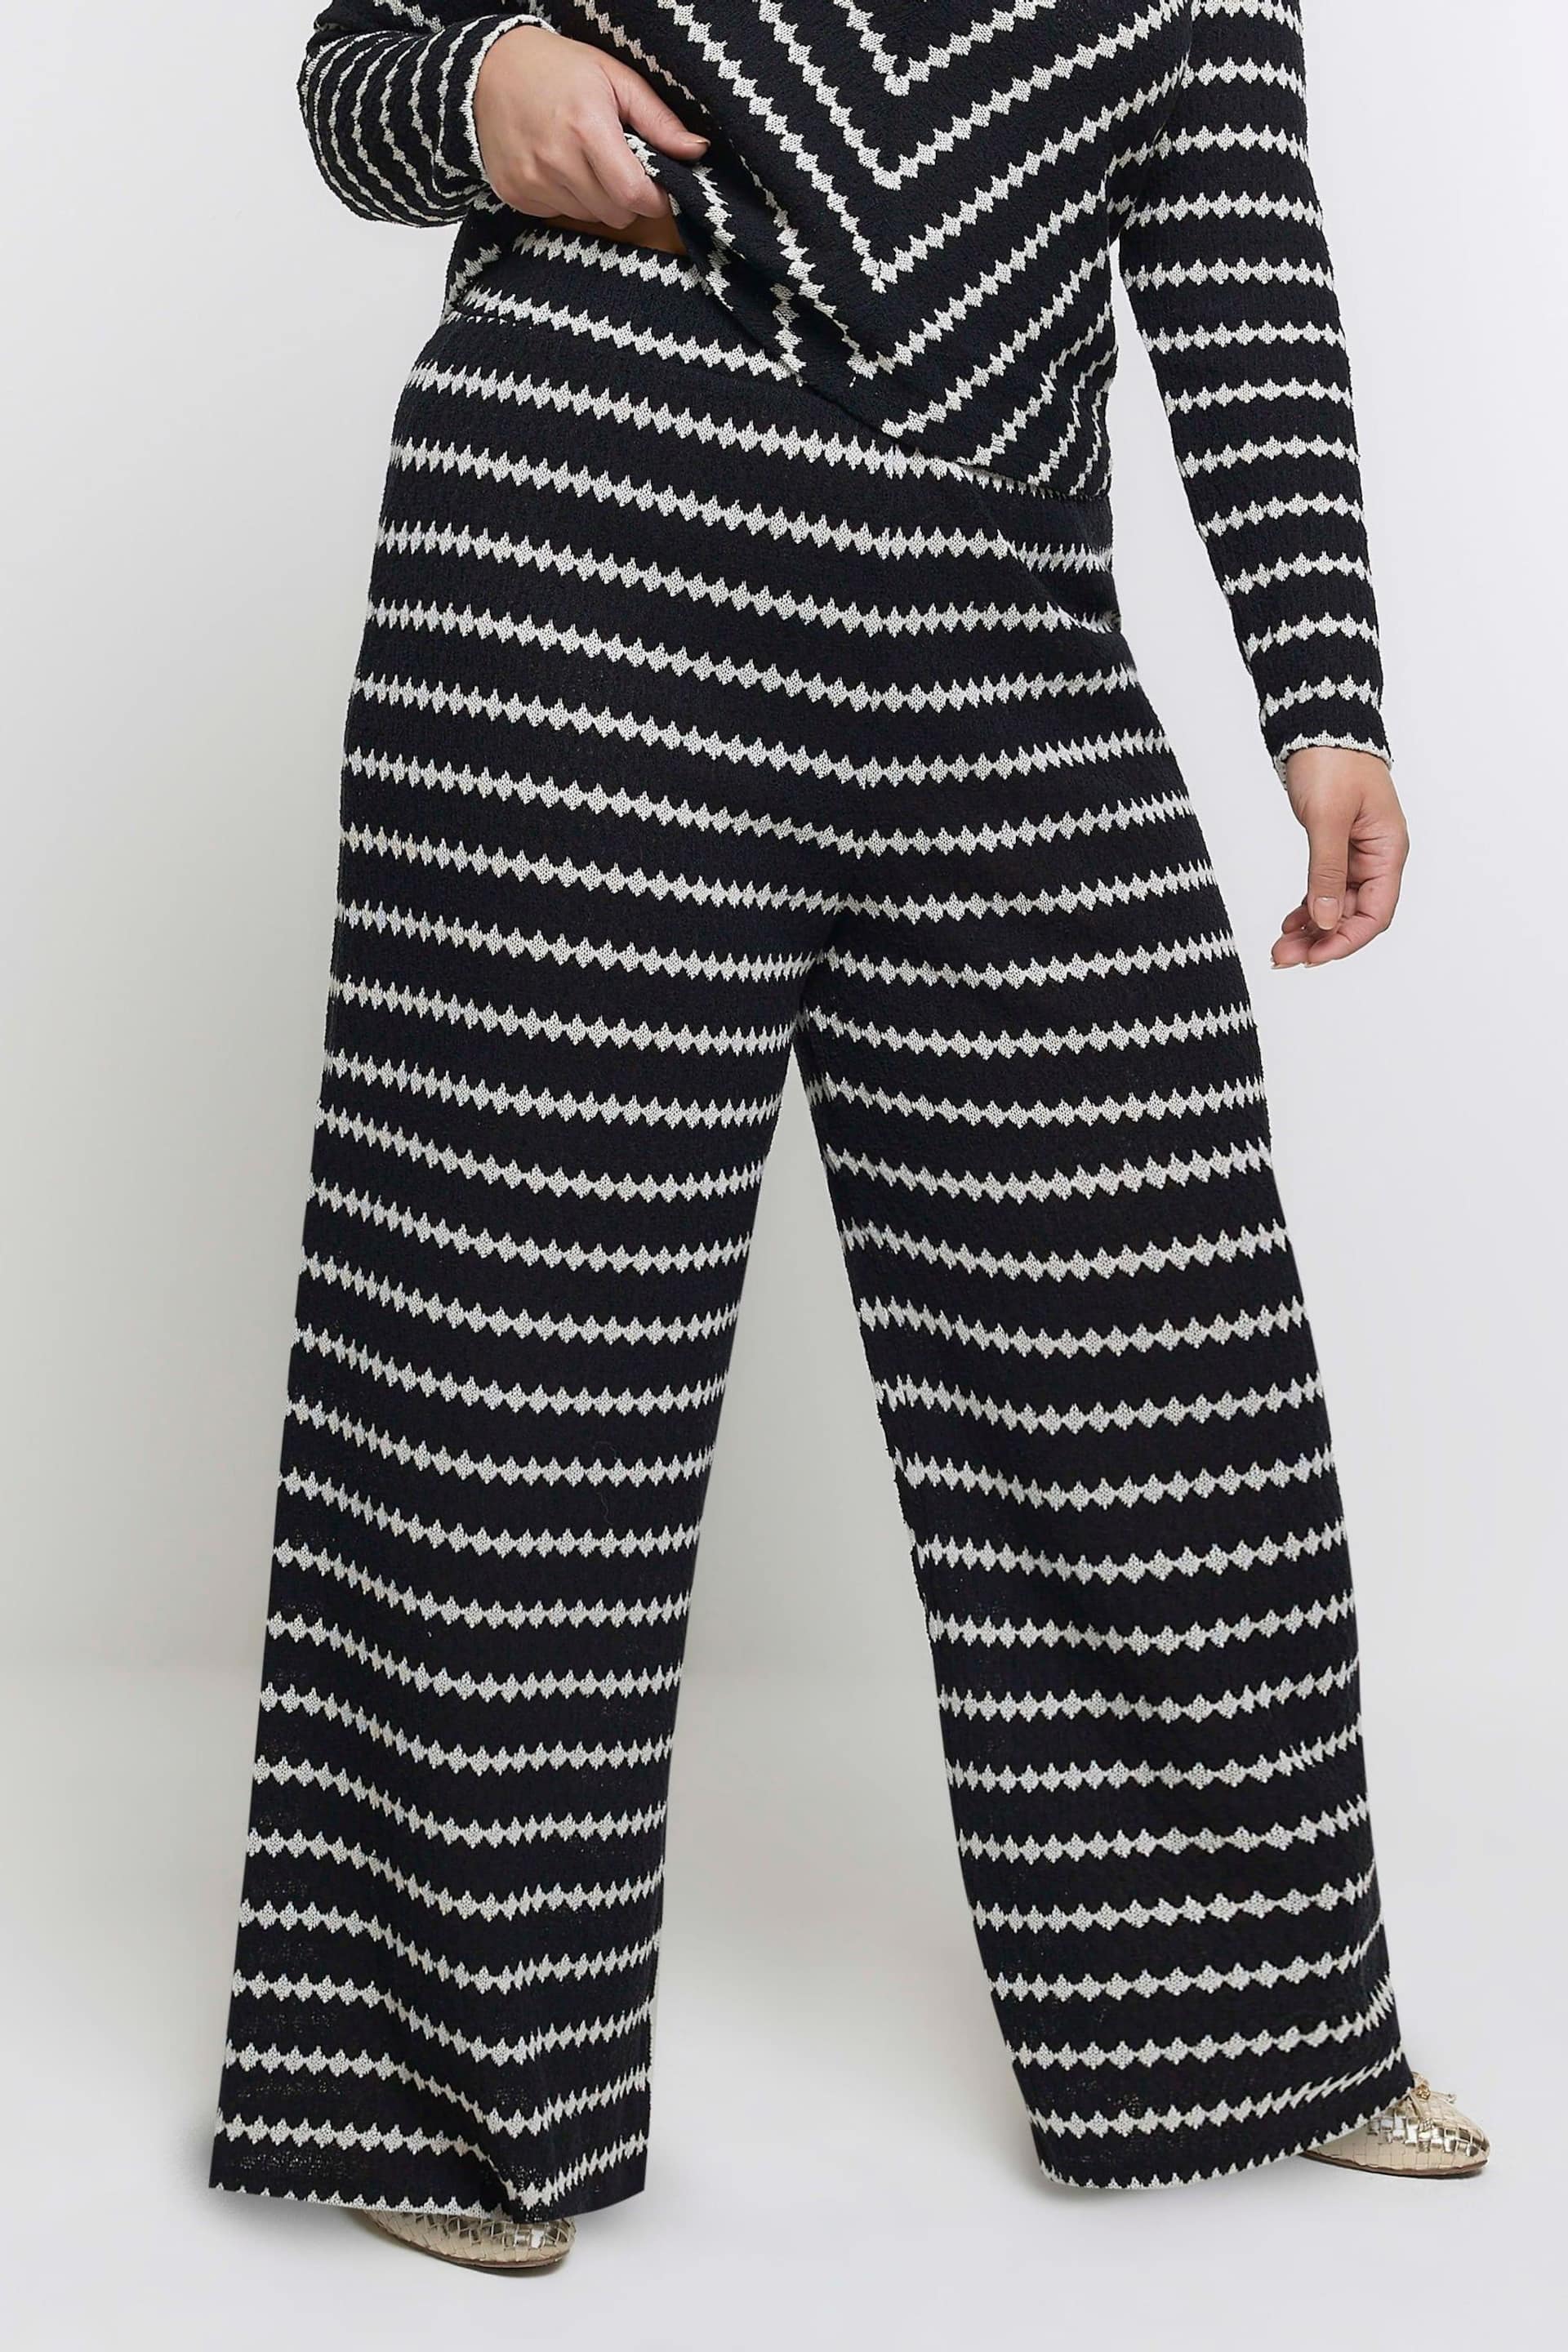 River Island Black Curve Wide Leg Crochet Trousers - Image 1 of 4